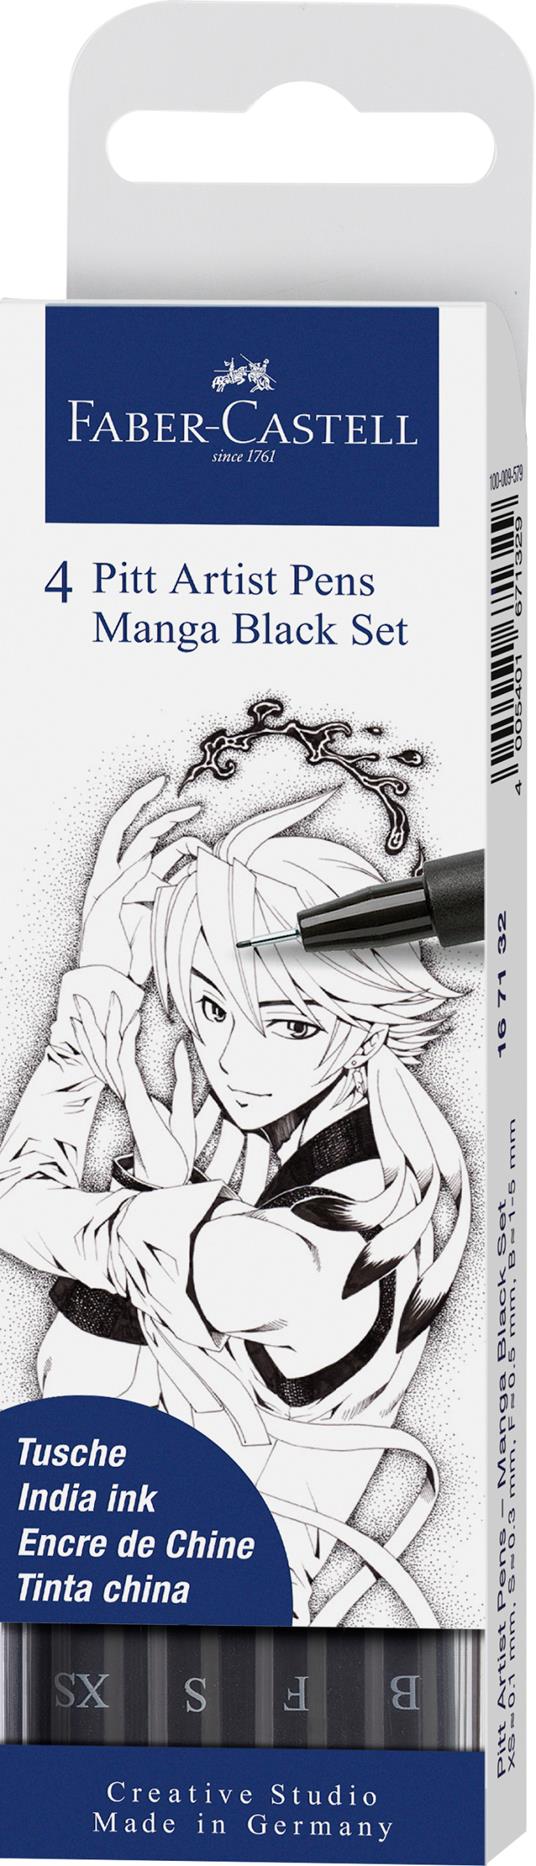 Bustina da 4 Pitt Artist Pen-Manga Nero nei tratti XS-S-F-B - 2